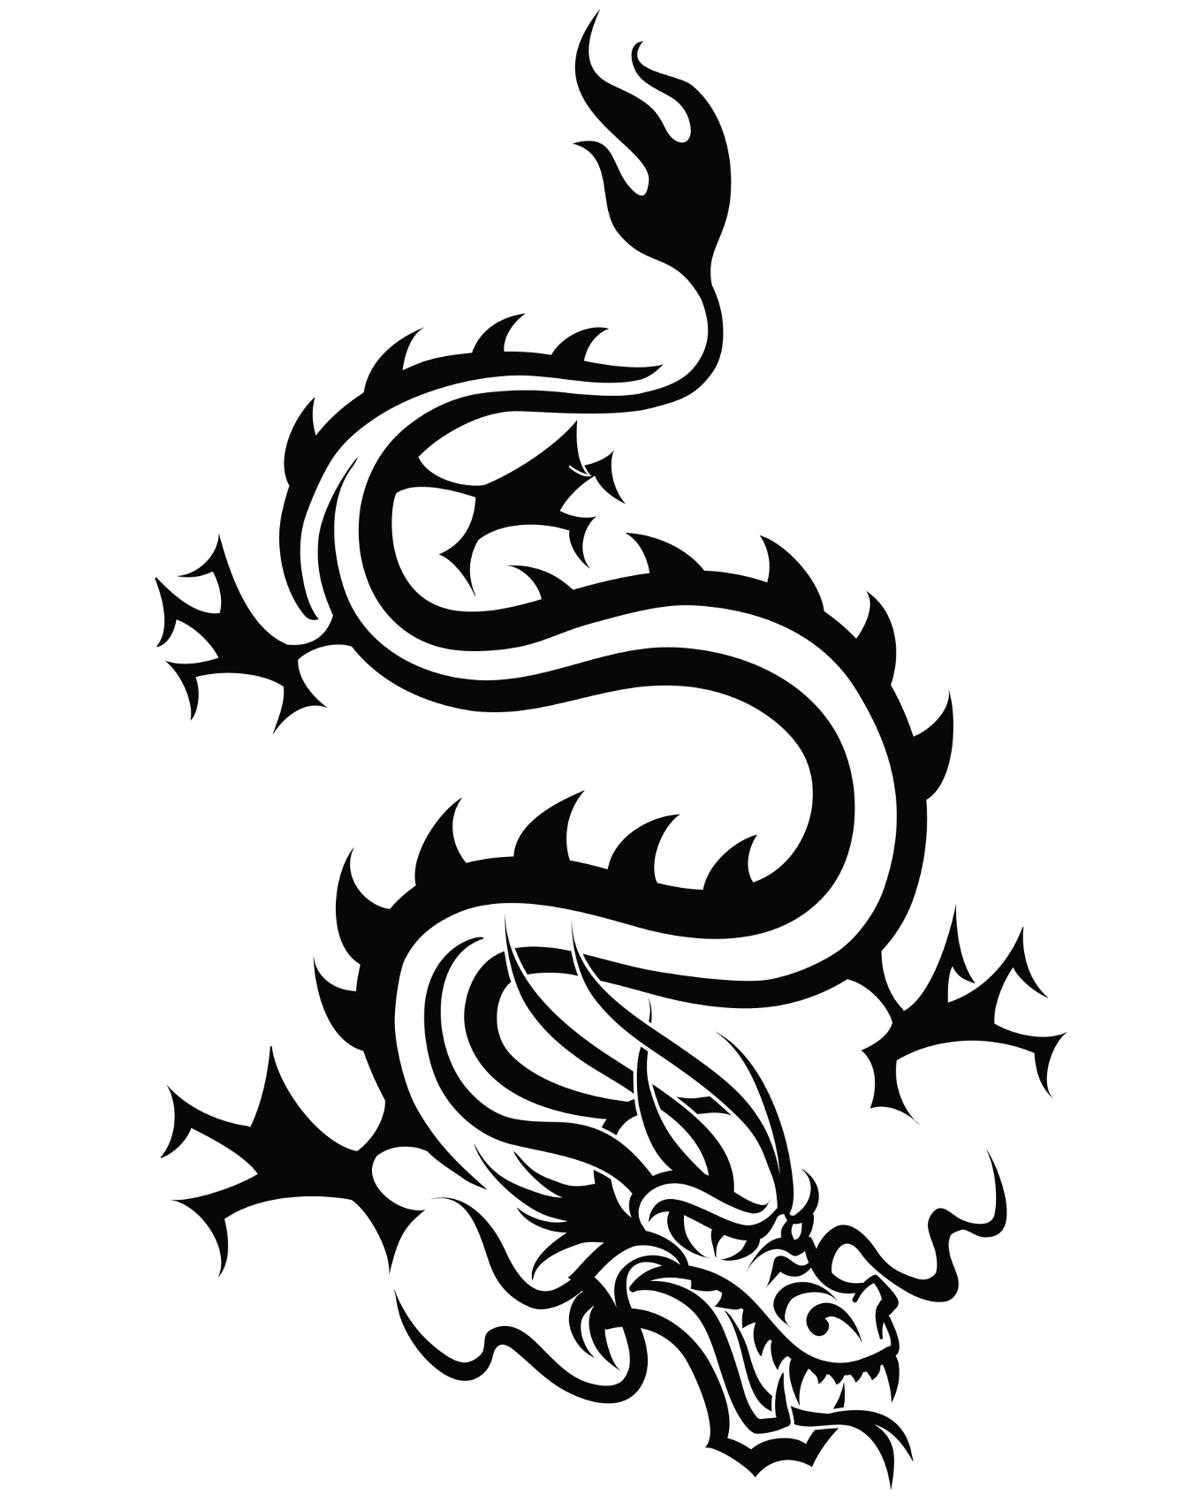 2JPG filipinotattoostraditional  Japanese dragon tattoos Dragon tattoo  colour Dragon tattoo art